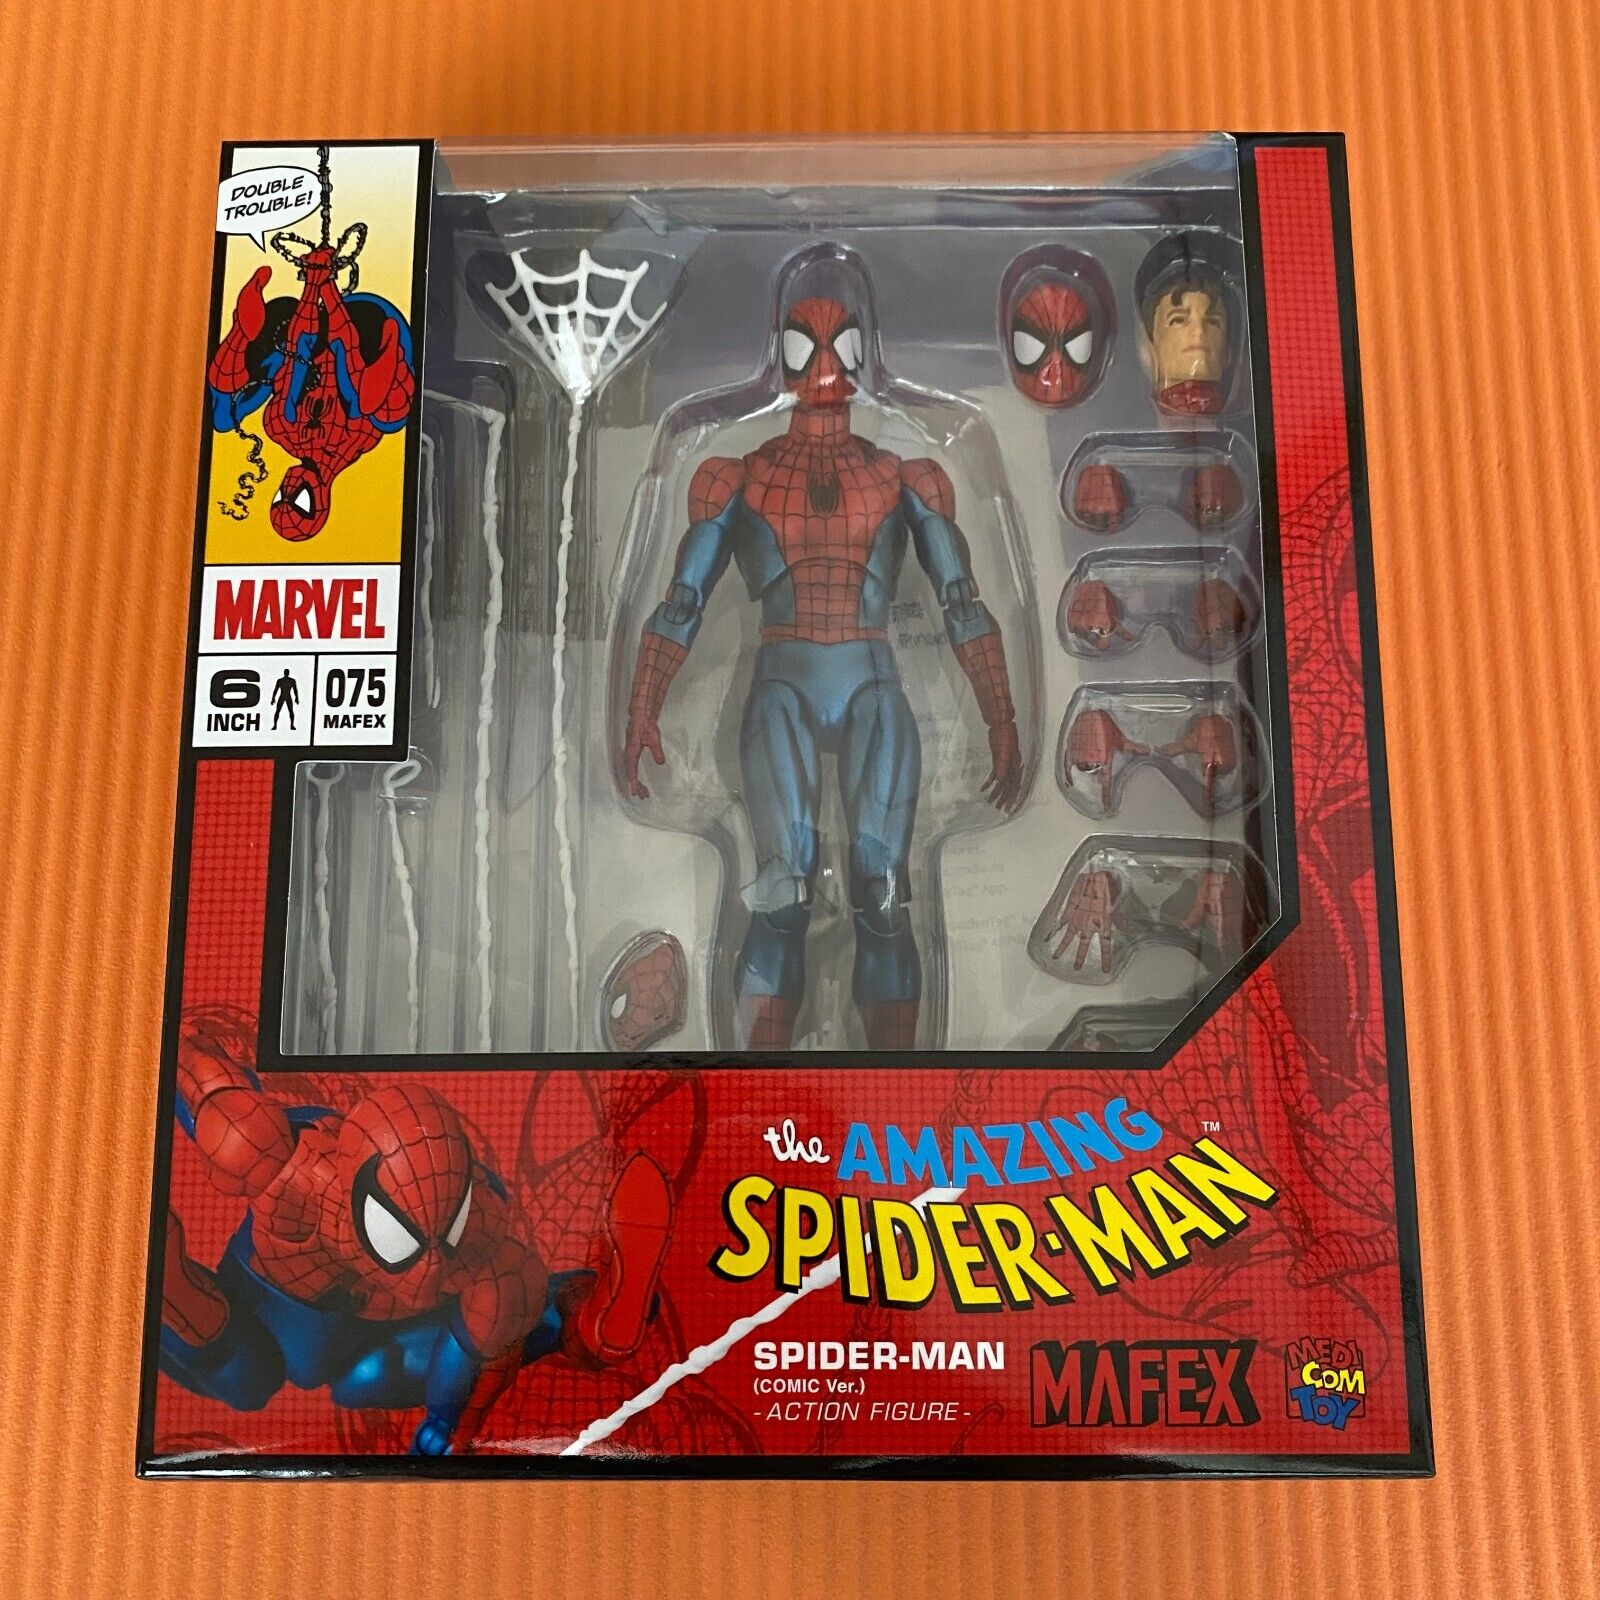 MAFEX No.075 MARVEL SPIDER-MAN COMIC Ver. Action Figure Medicom Toy New